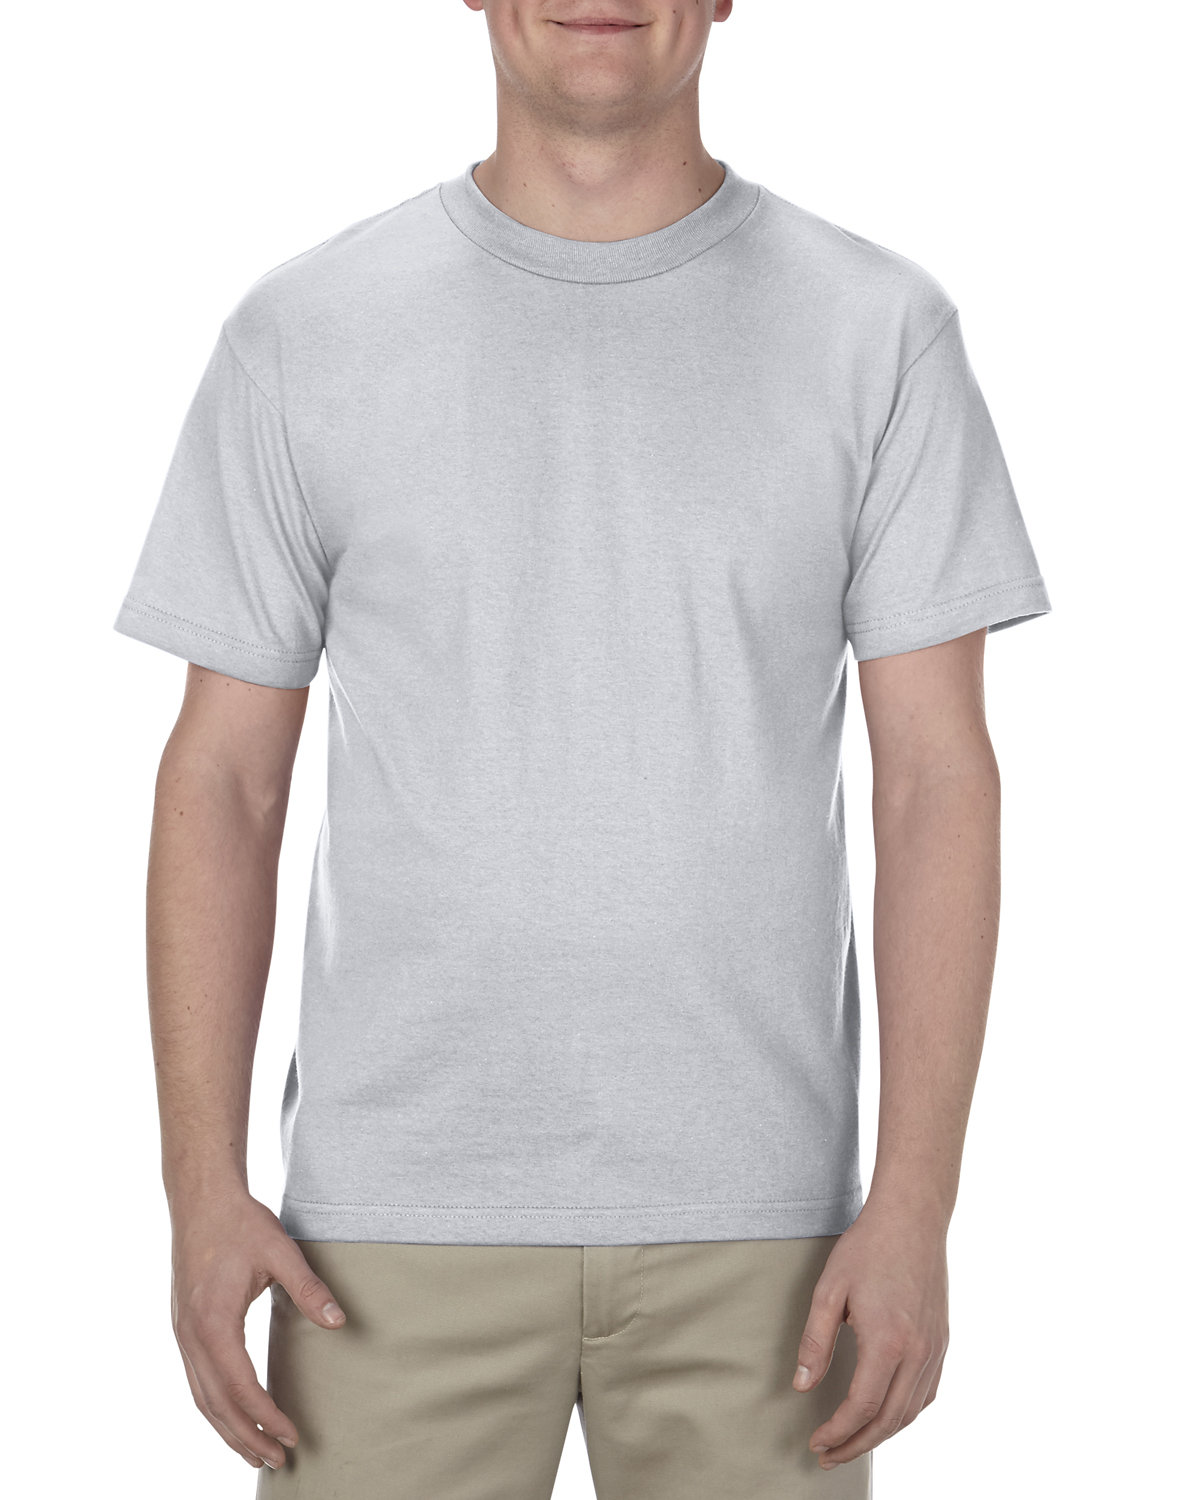 American Apparel Unisex Heavyweight Cotton T-Shirt silver 